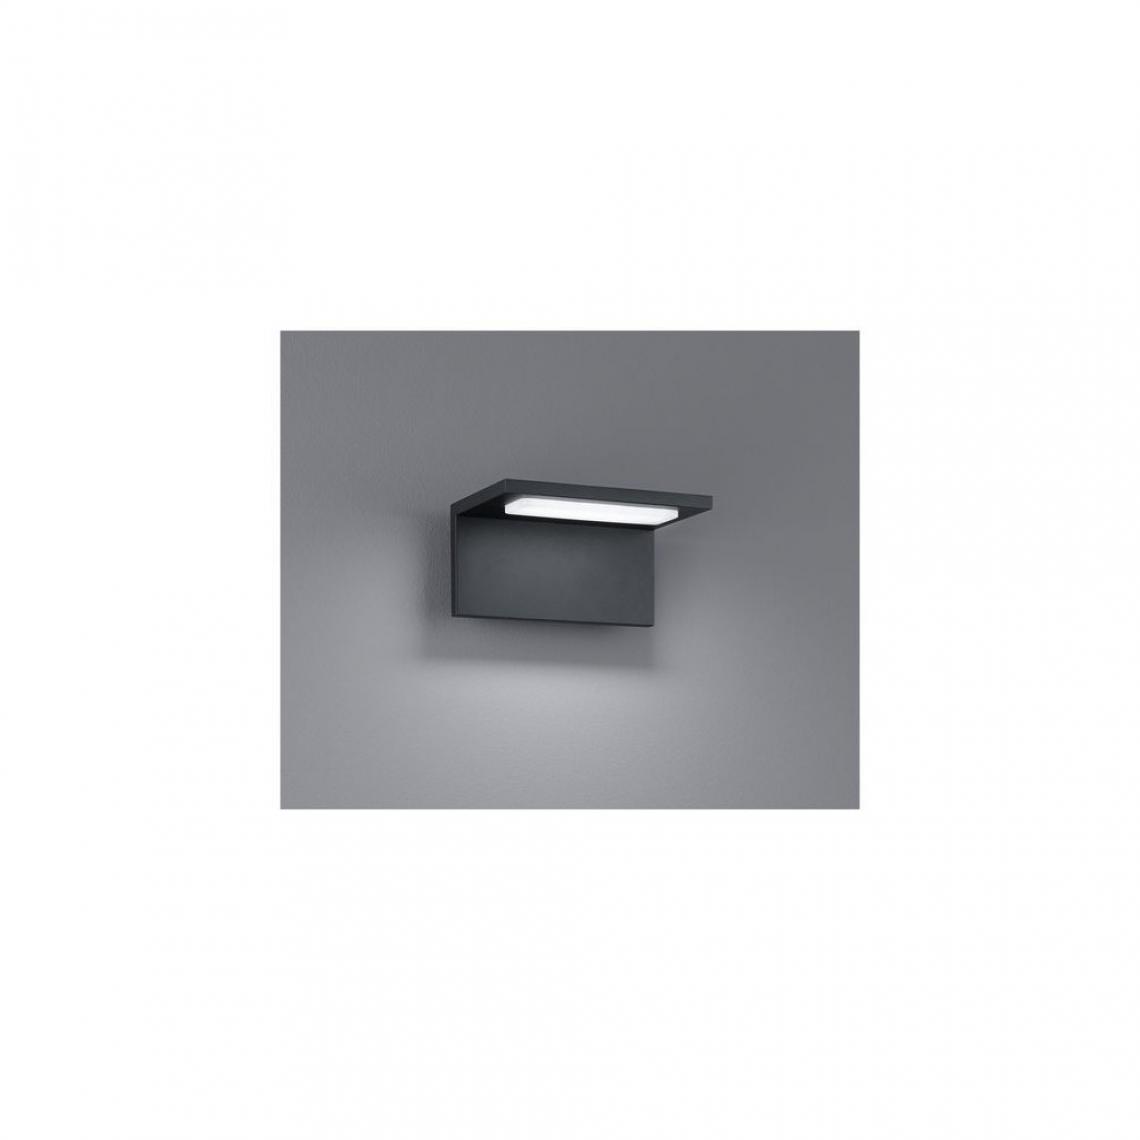 Boutica-Design - Applique Trave Anthracite 1x6W SMD LED - Applique, hublot